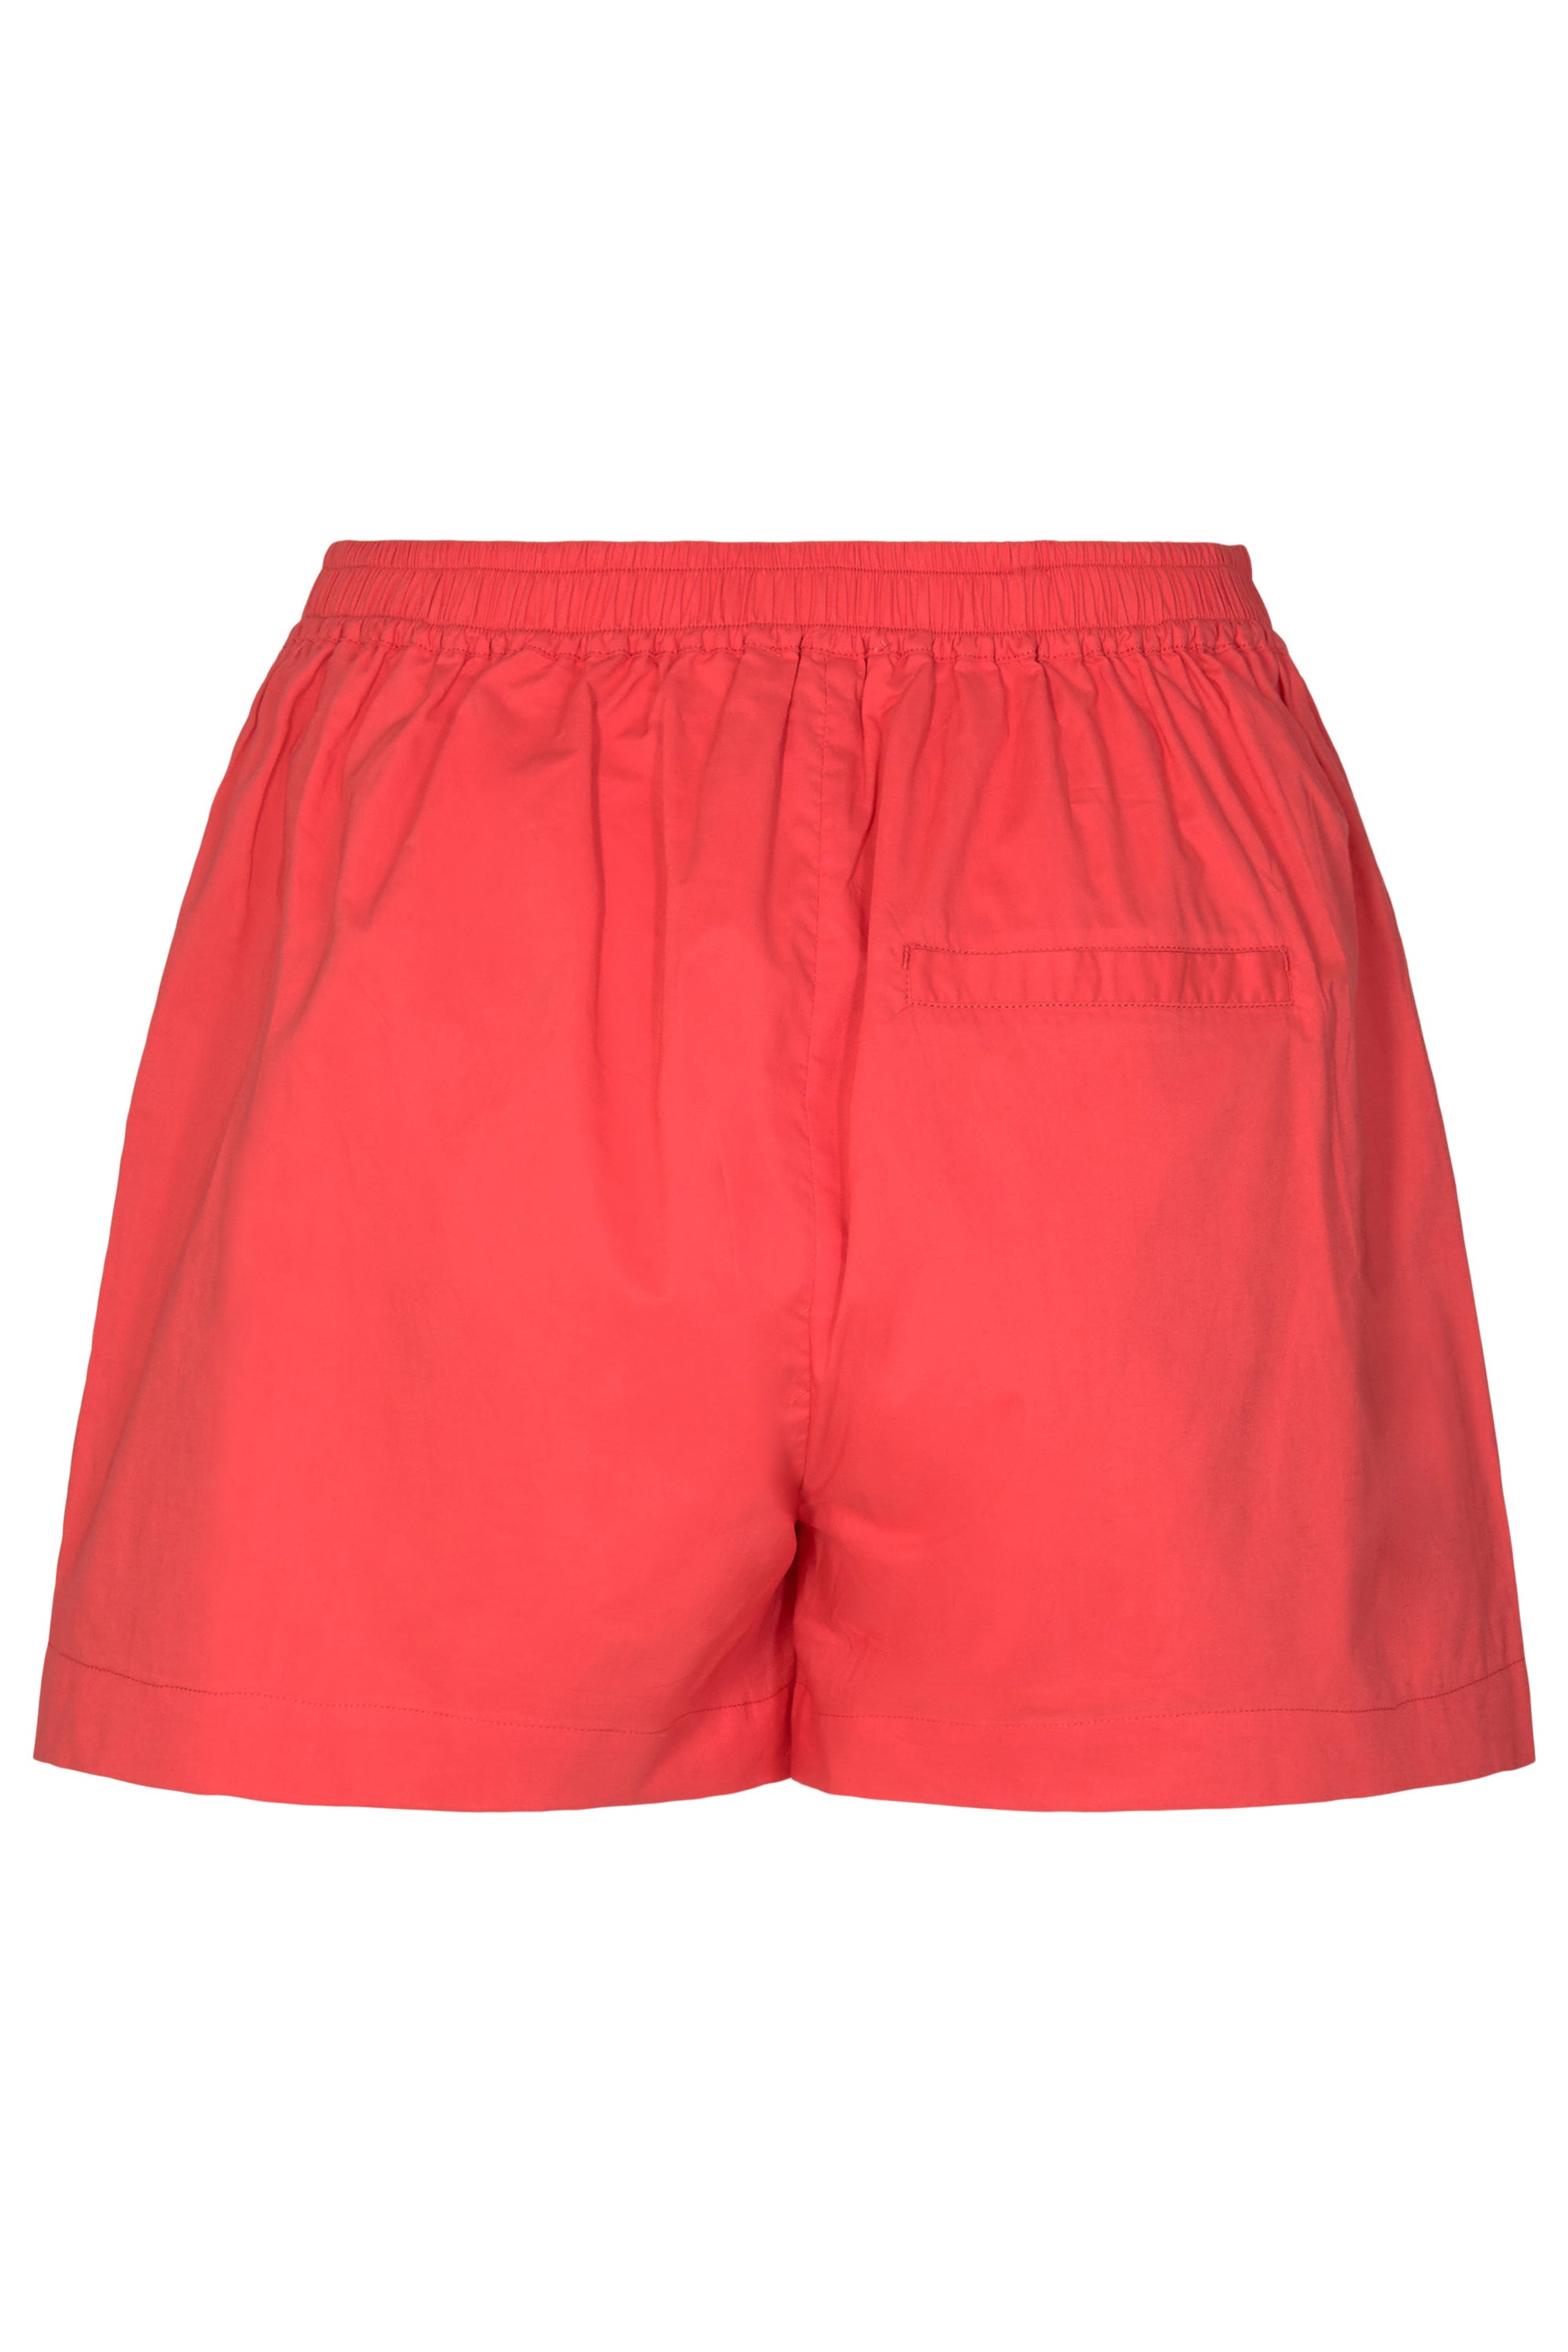 Sandrine Elastic Shorts - Red